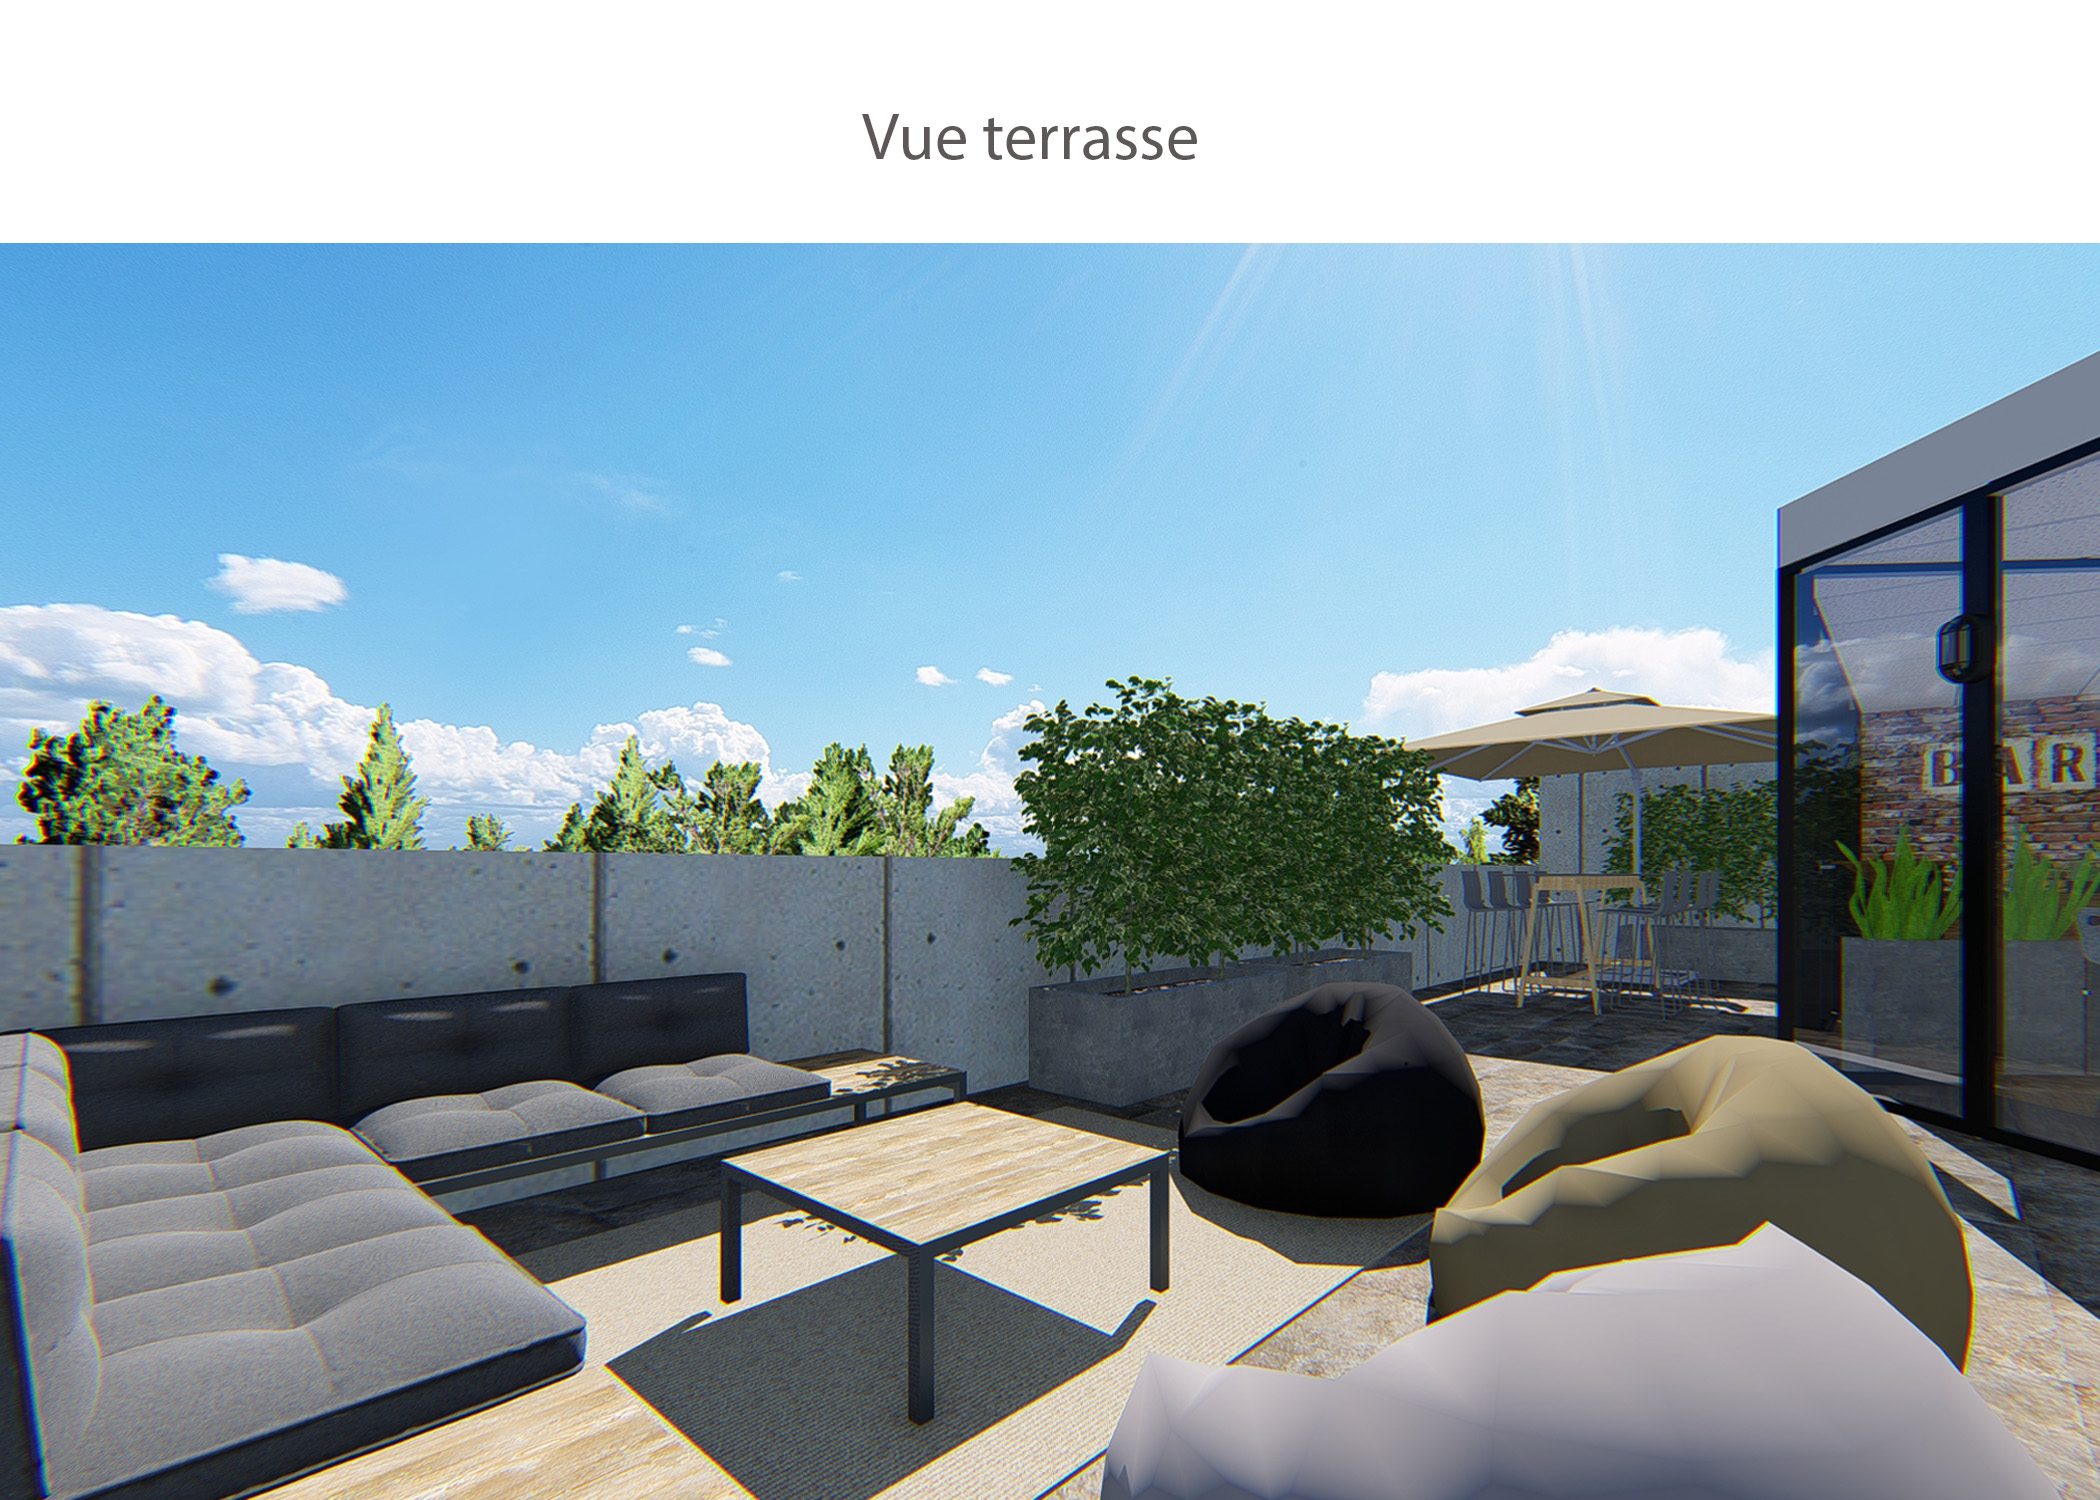 amenagement-decoration-start-up vente en ligne-region parisienne-terrasse-dekho design